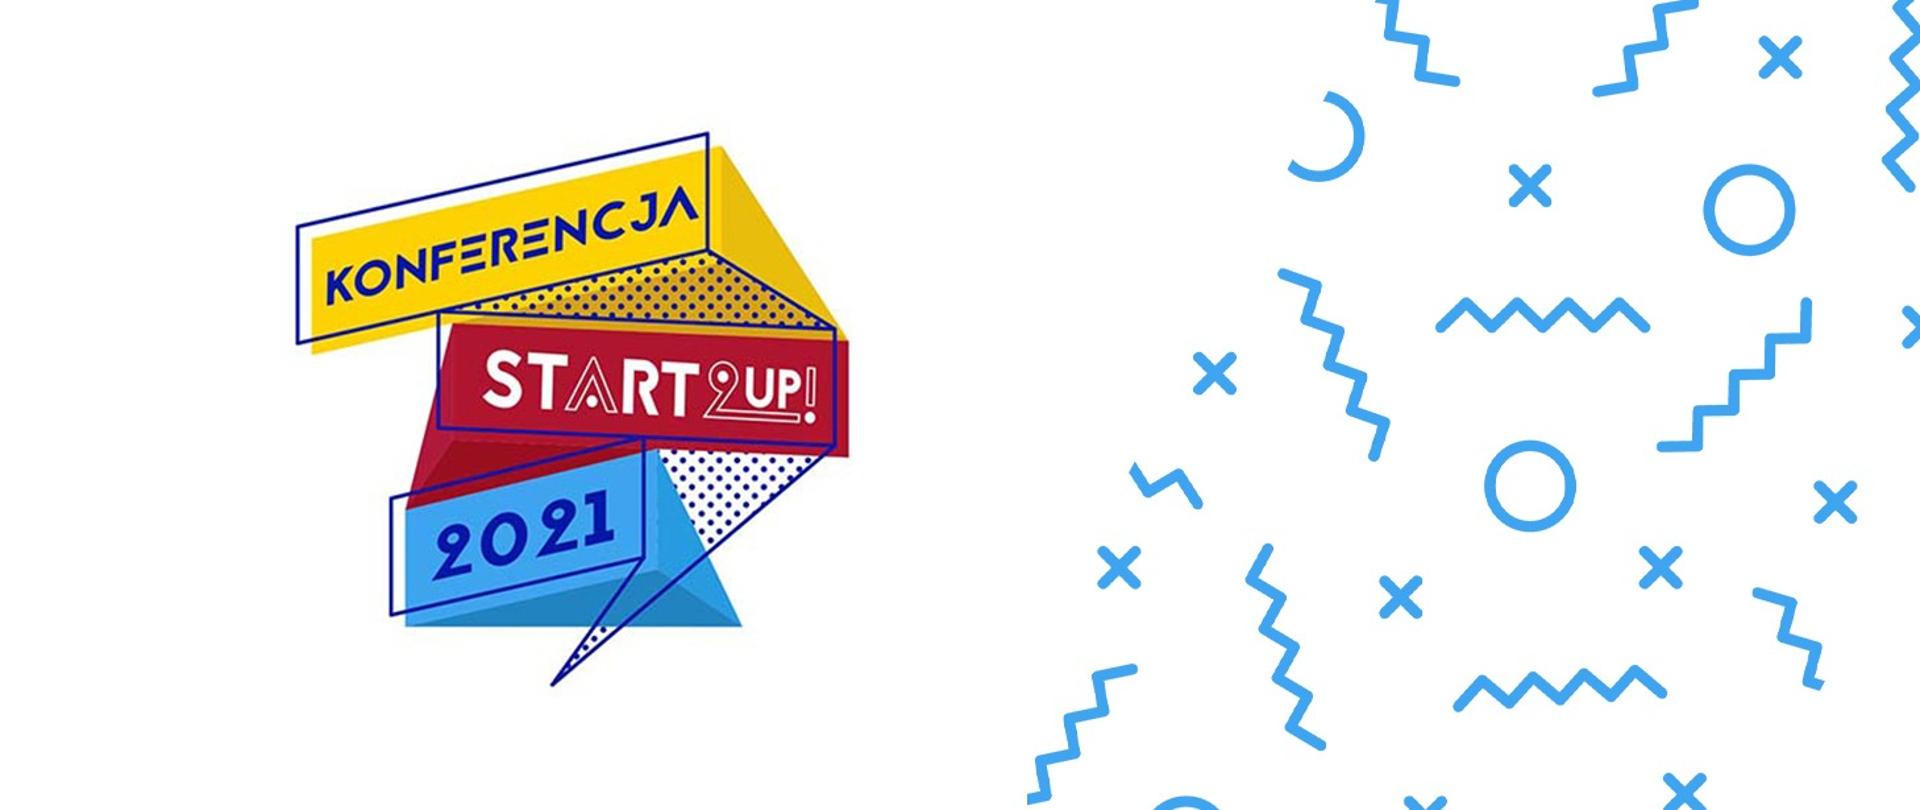  Komunikat z konferencji Start2UP! Na zdjęciu znajduje się logo konferencji. Kolorowe elementy z napisem Konferencja, start2up, 2021. 